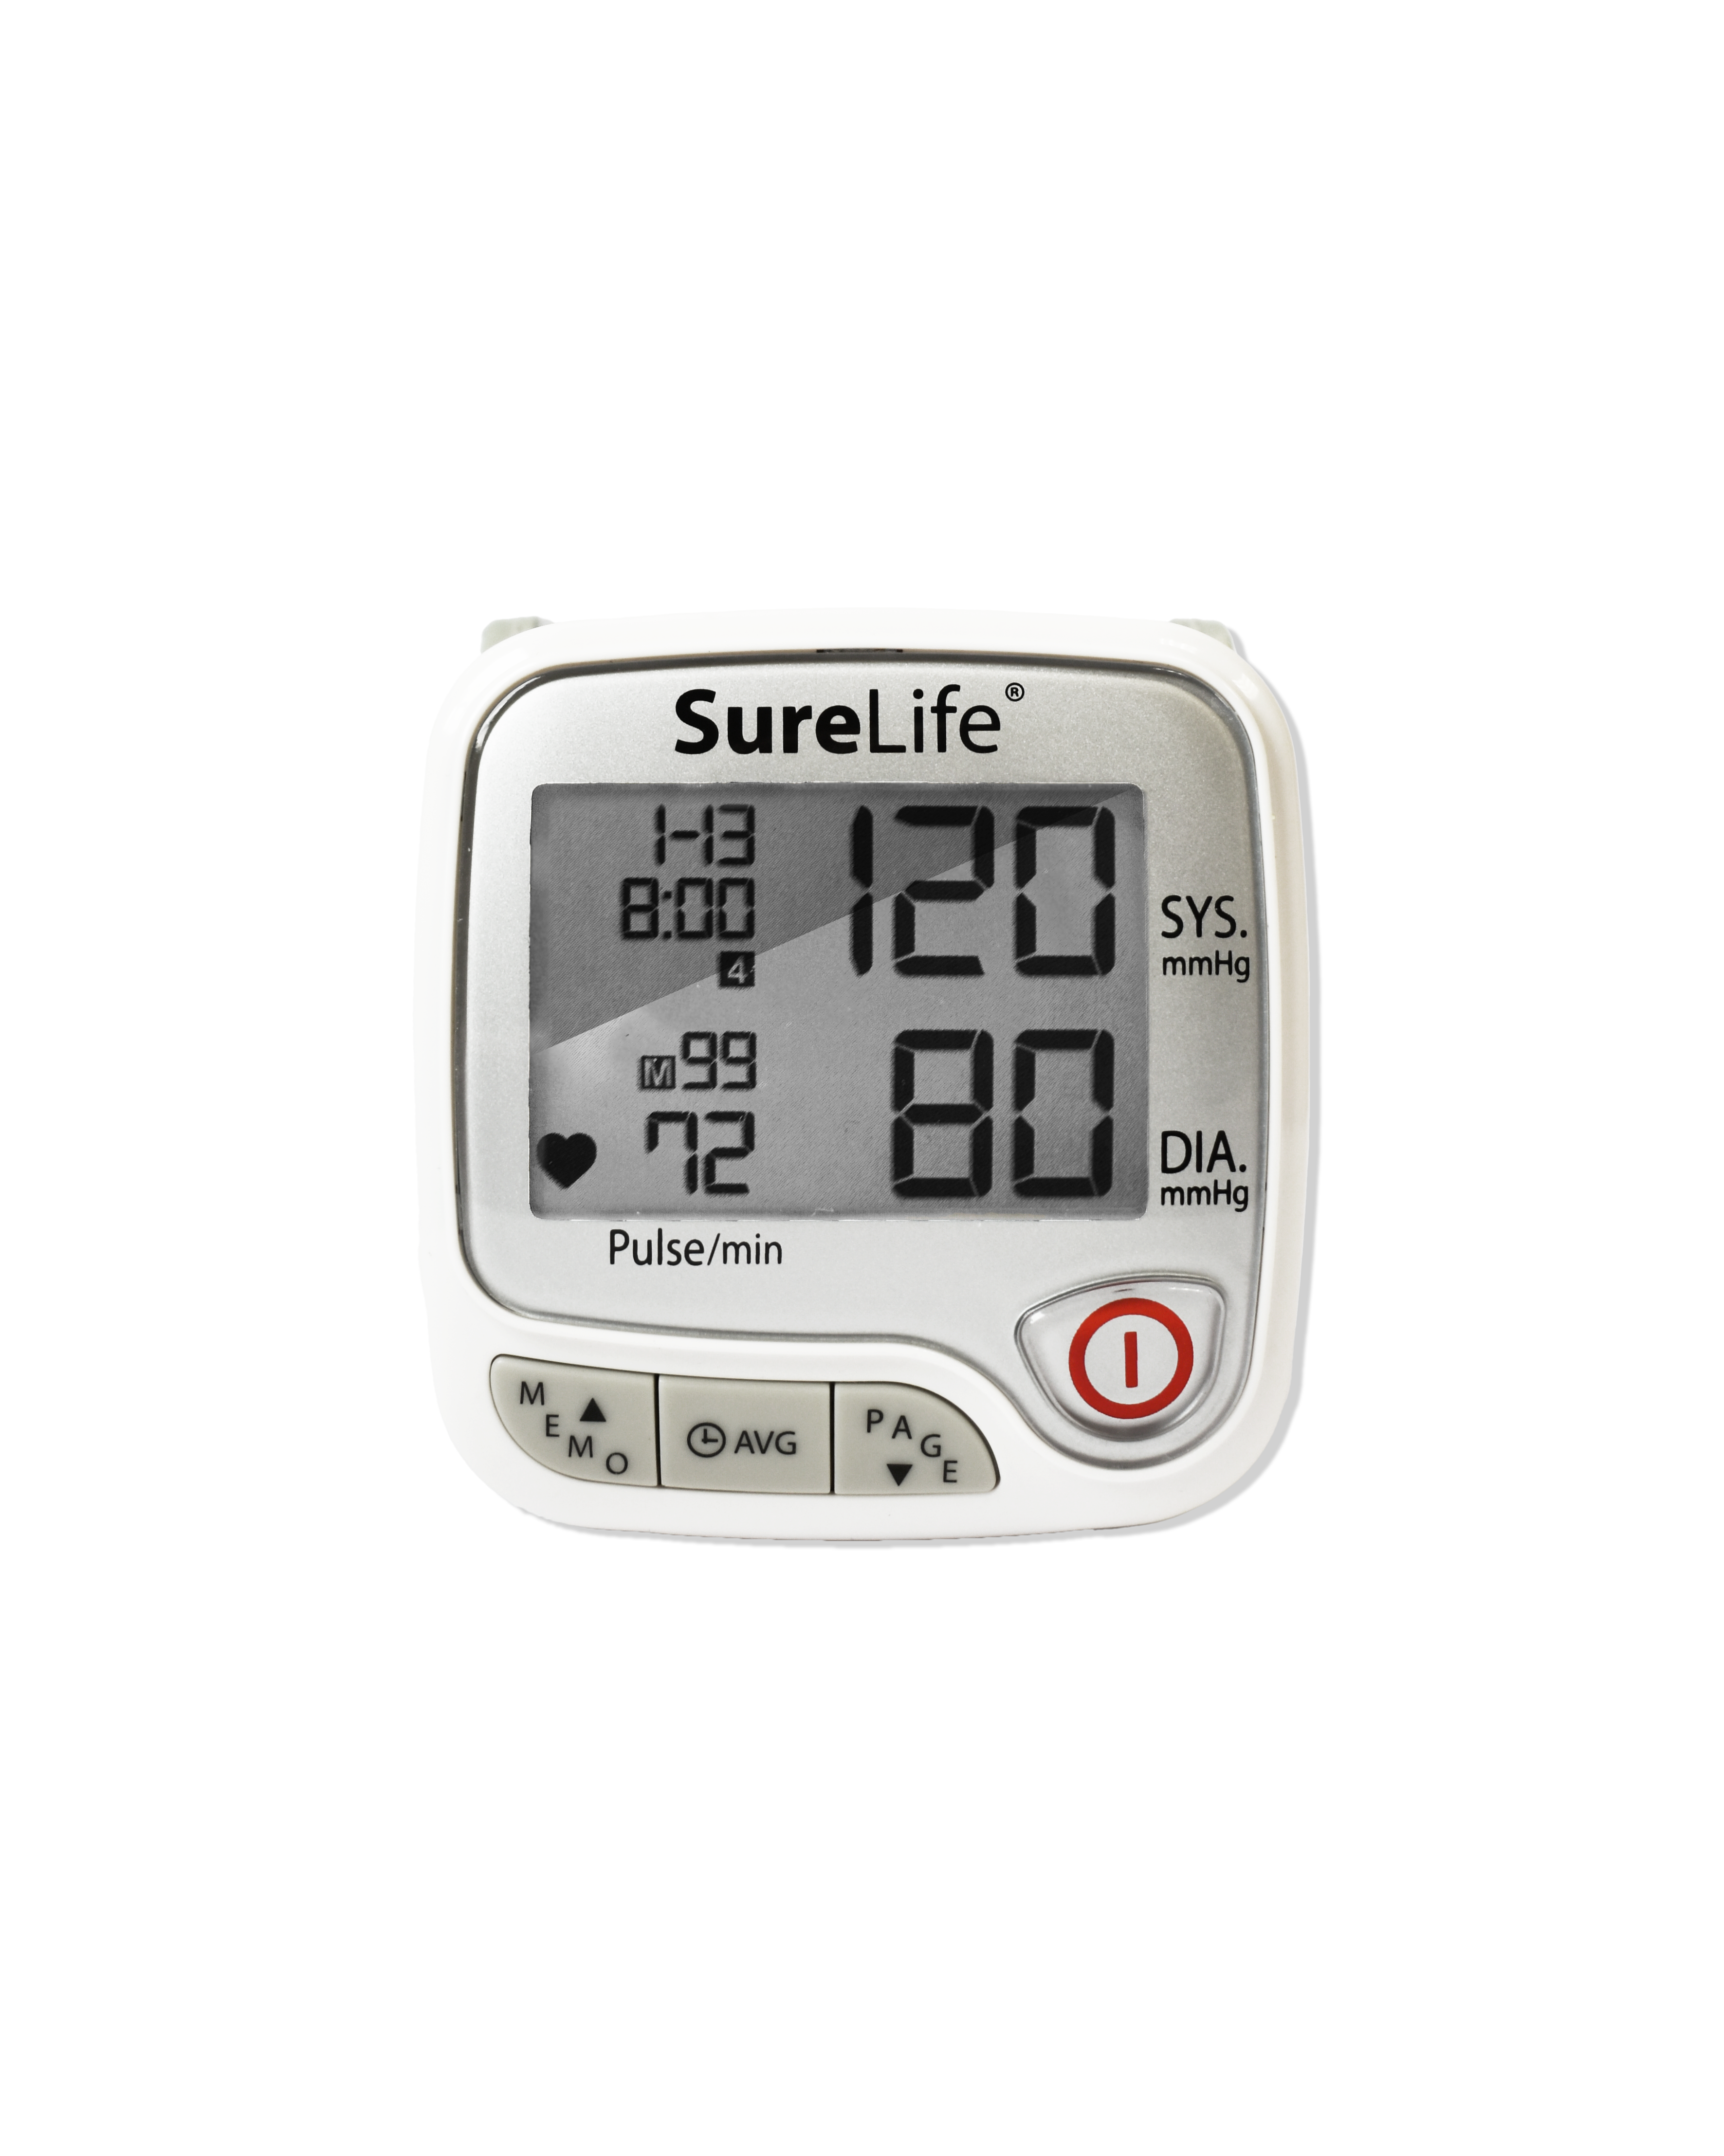 A&D Essential Wrist Blood Pressure Monitor (Model UB525)